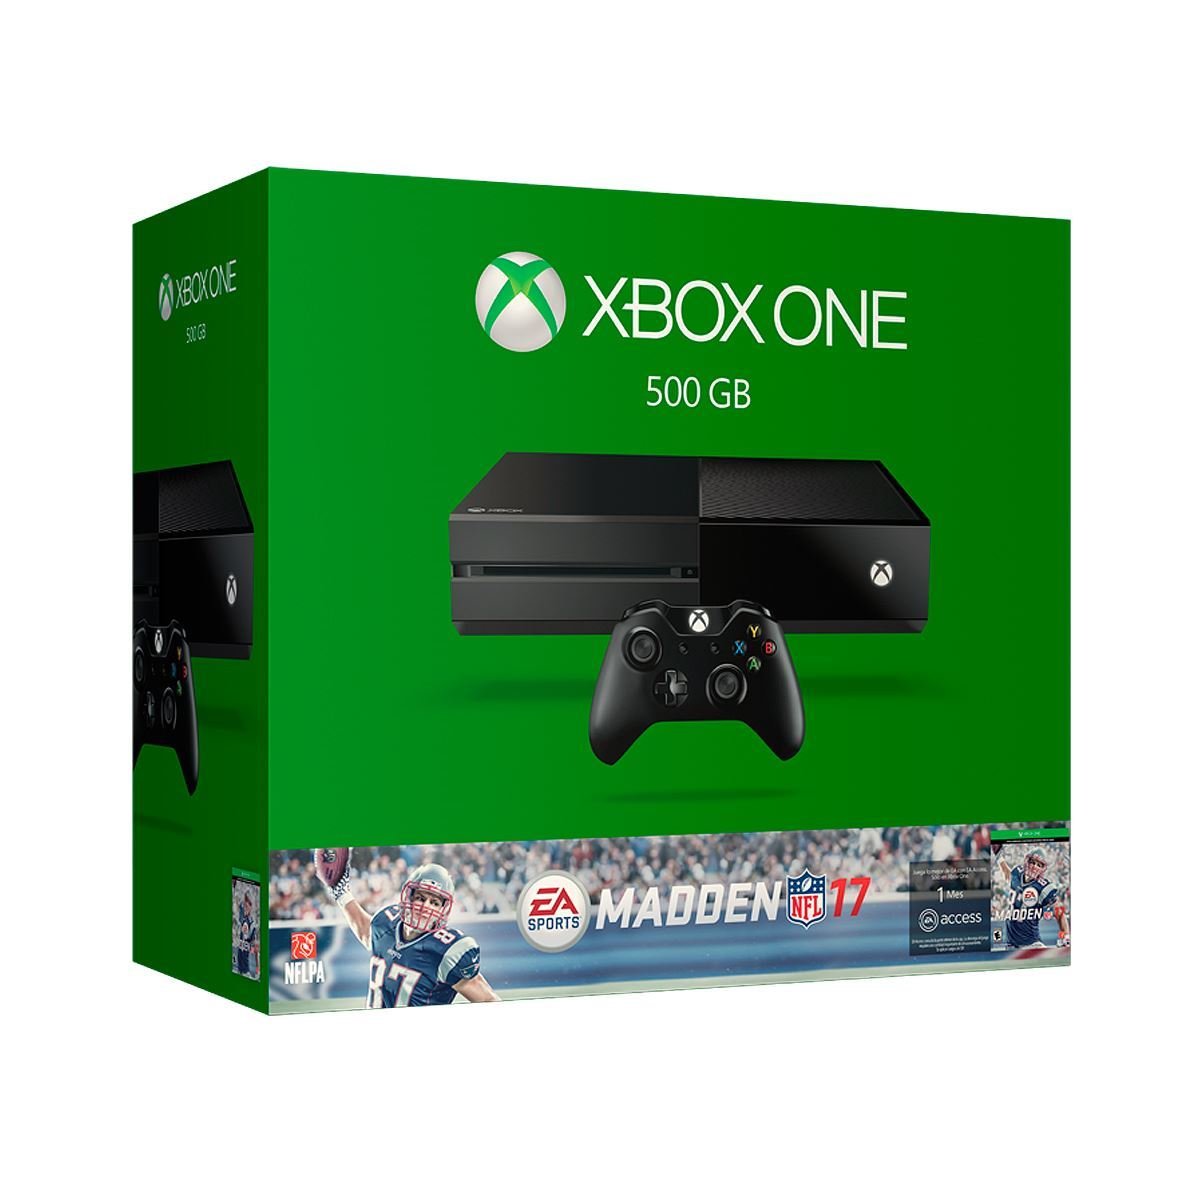 Consola Xbox ONE 500GB Madden NFL 17